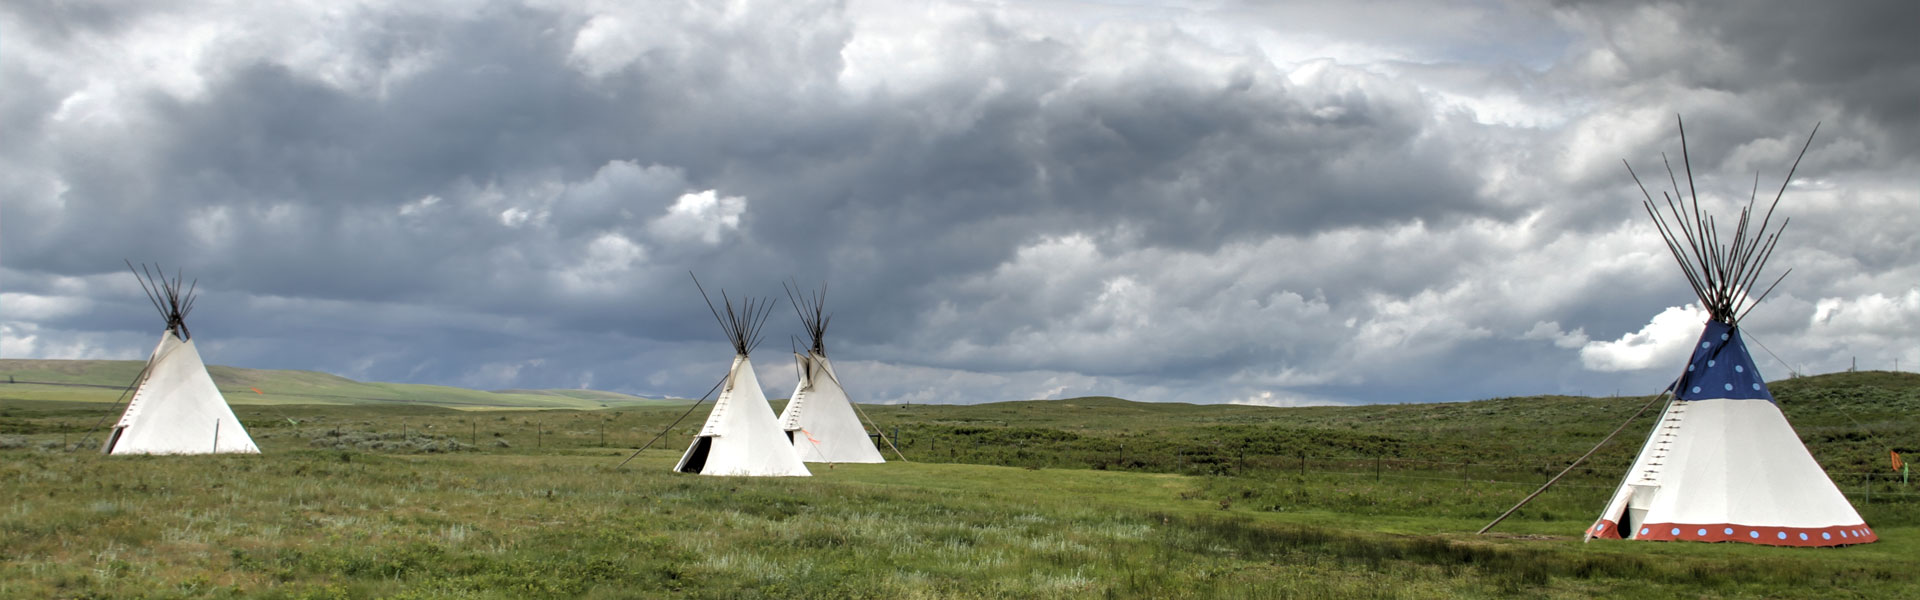 Tipis on Blackfoot Reservation